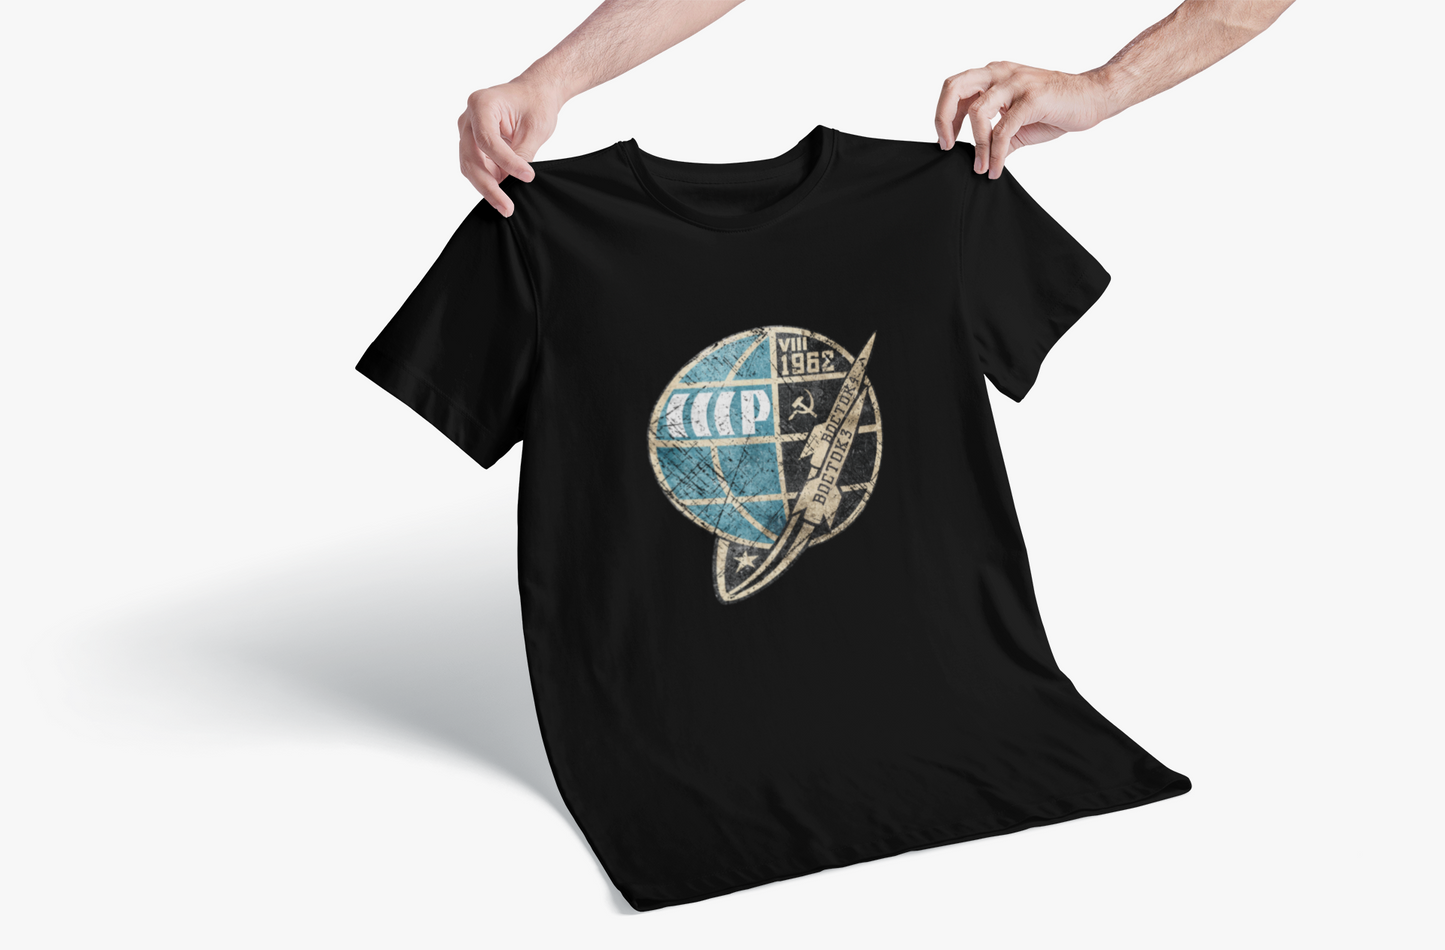 Vostok 1962 Unisex T-Shirt